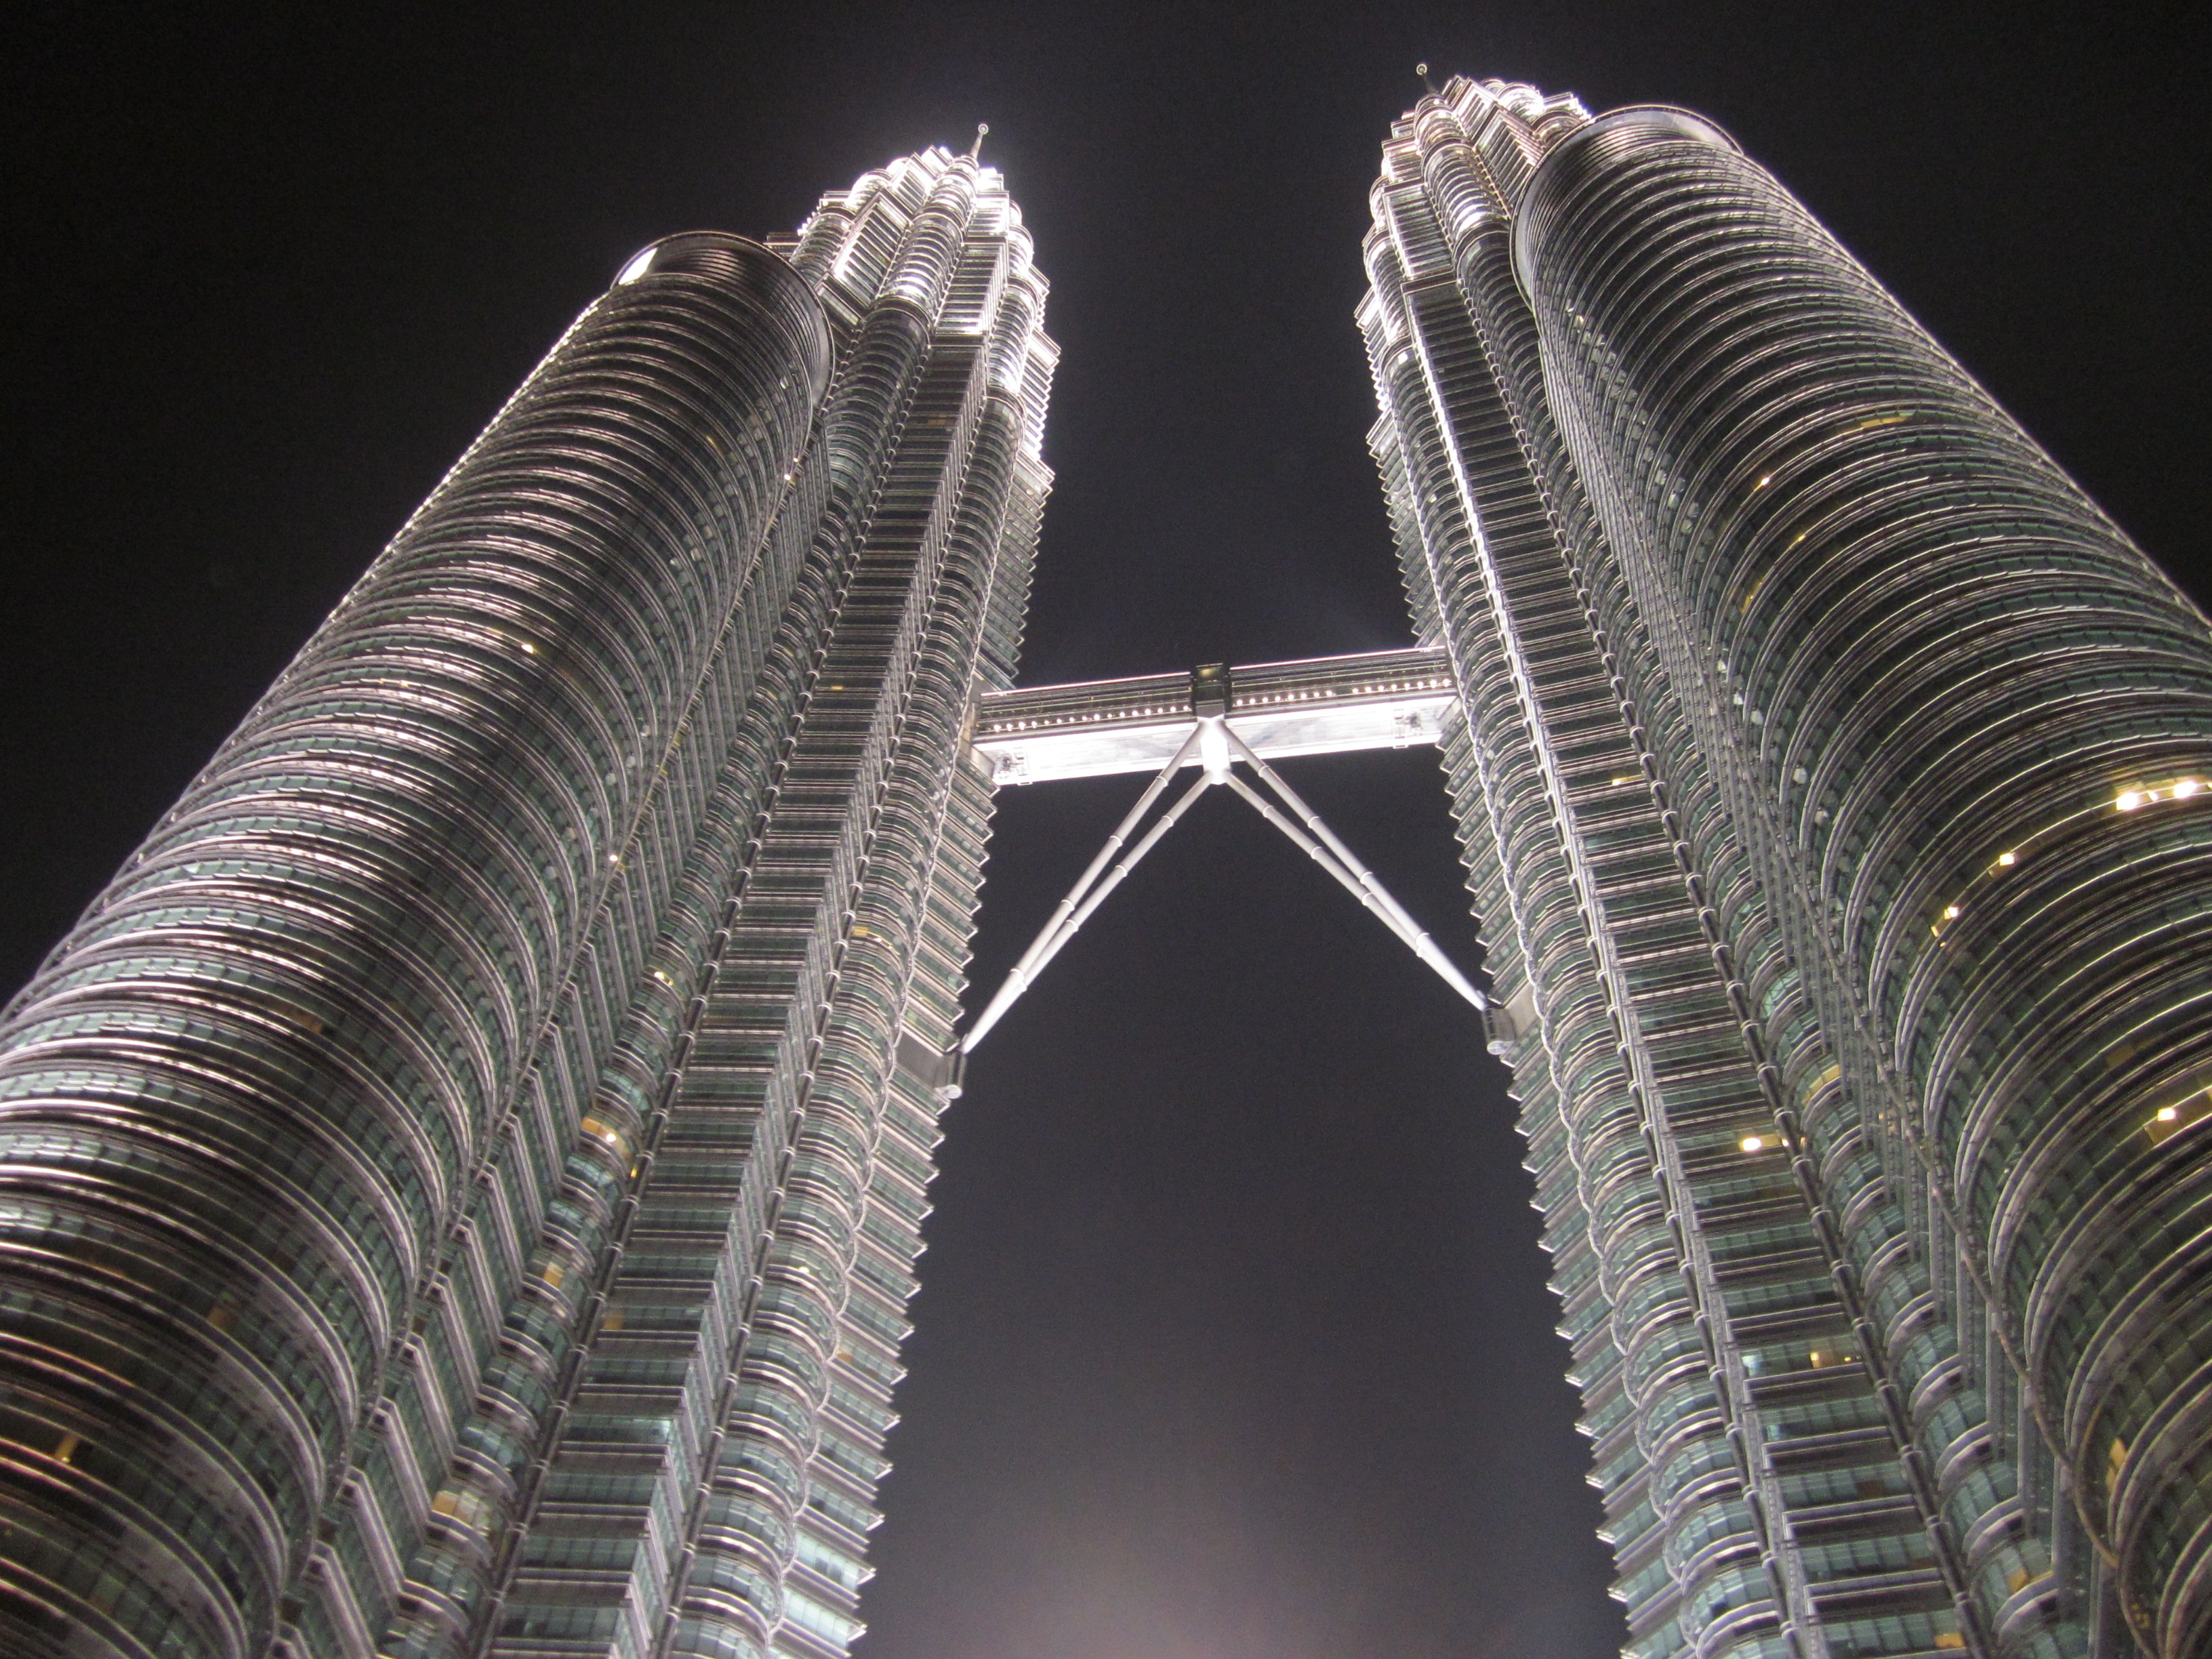 Welcome to Malaysia: High towers and high tea | Freedom 29